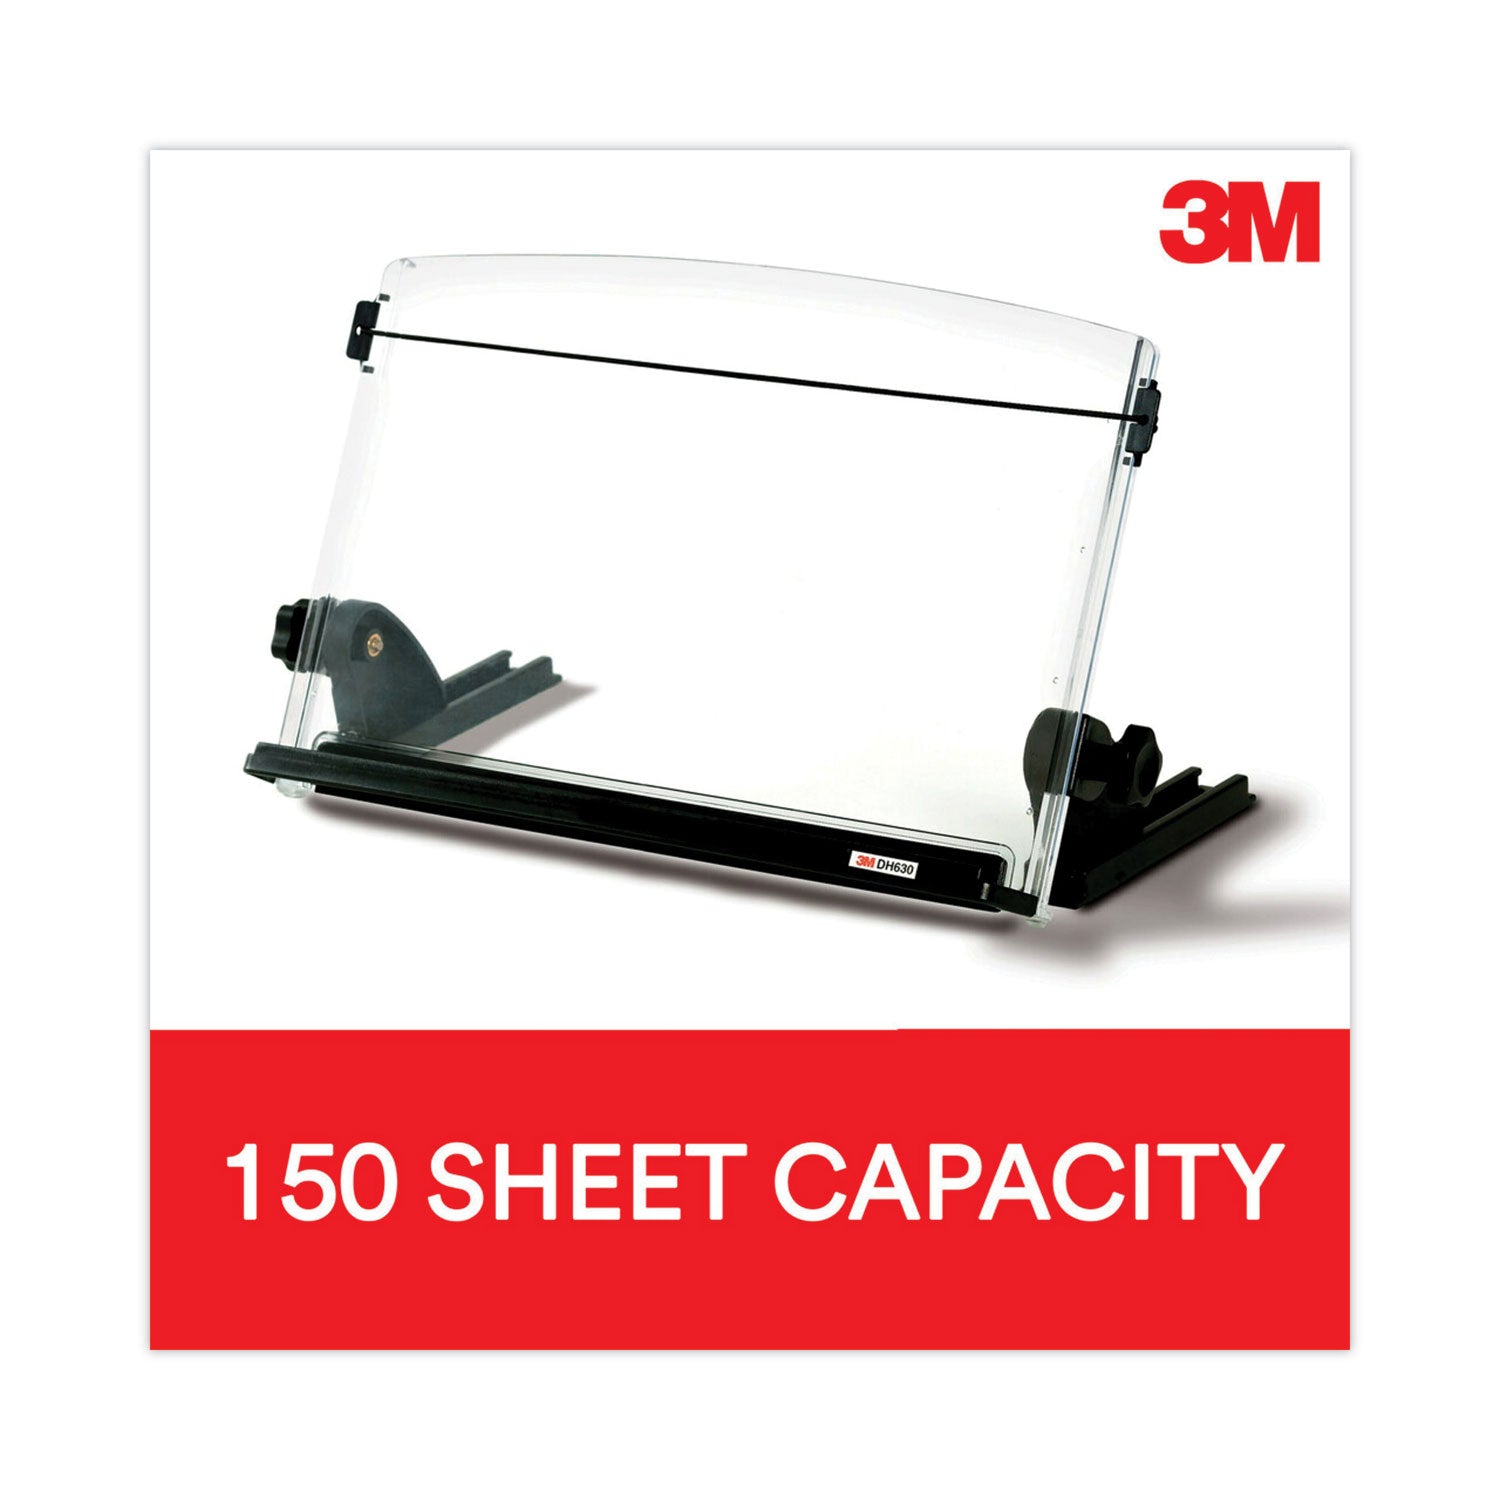 In-Line Adjustable Desktop Copyholder,150 Sheet Capacity, Plastic, Black/Clear - 